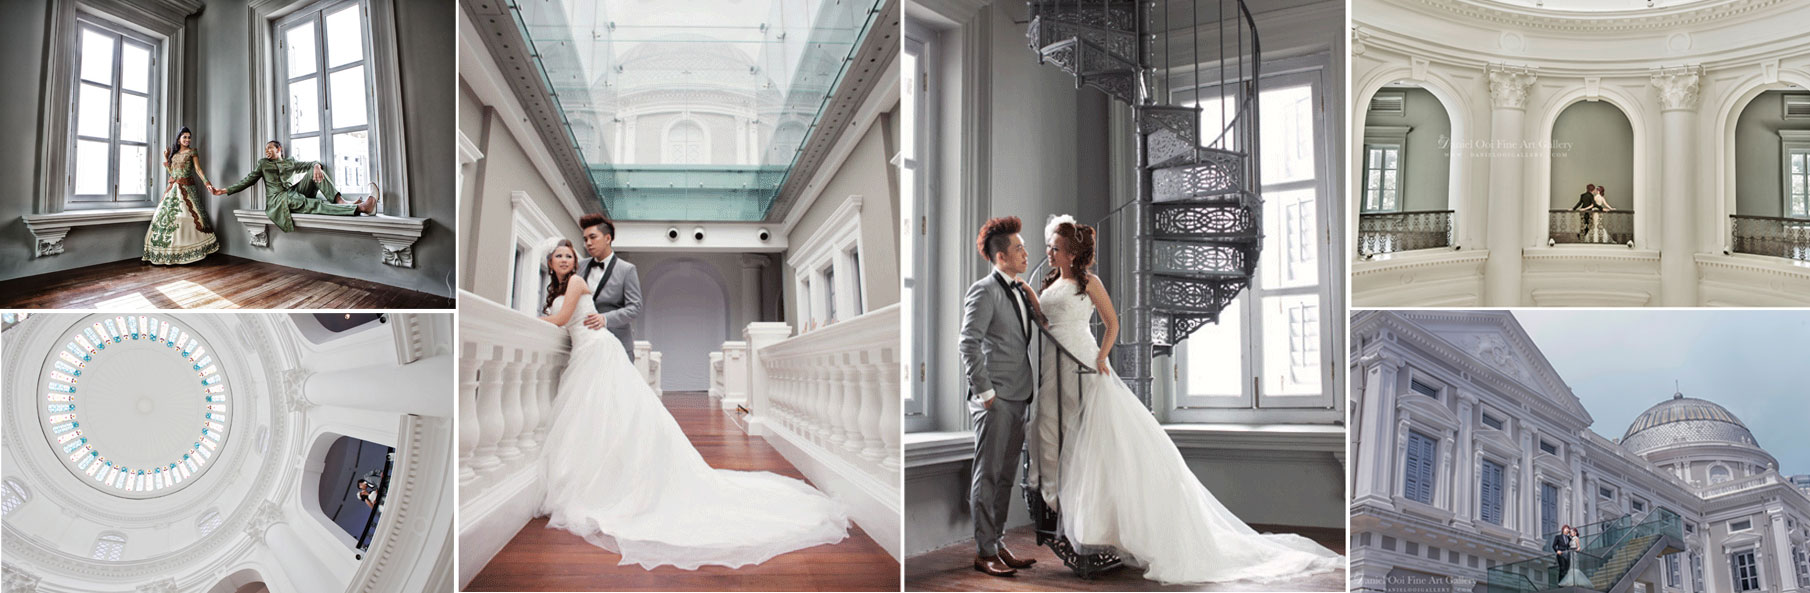 National-Museum-of-Singapore-wedding